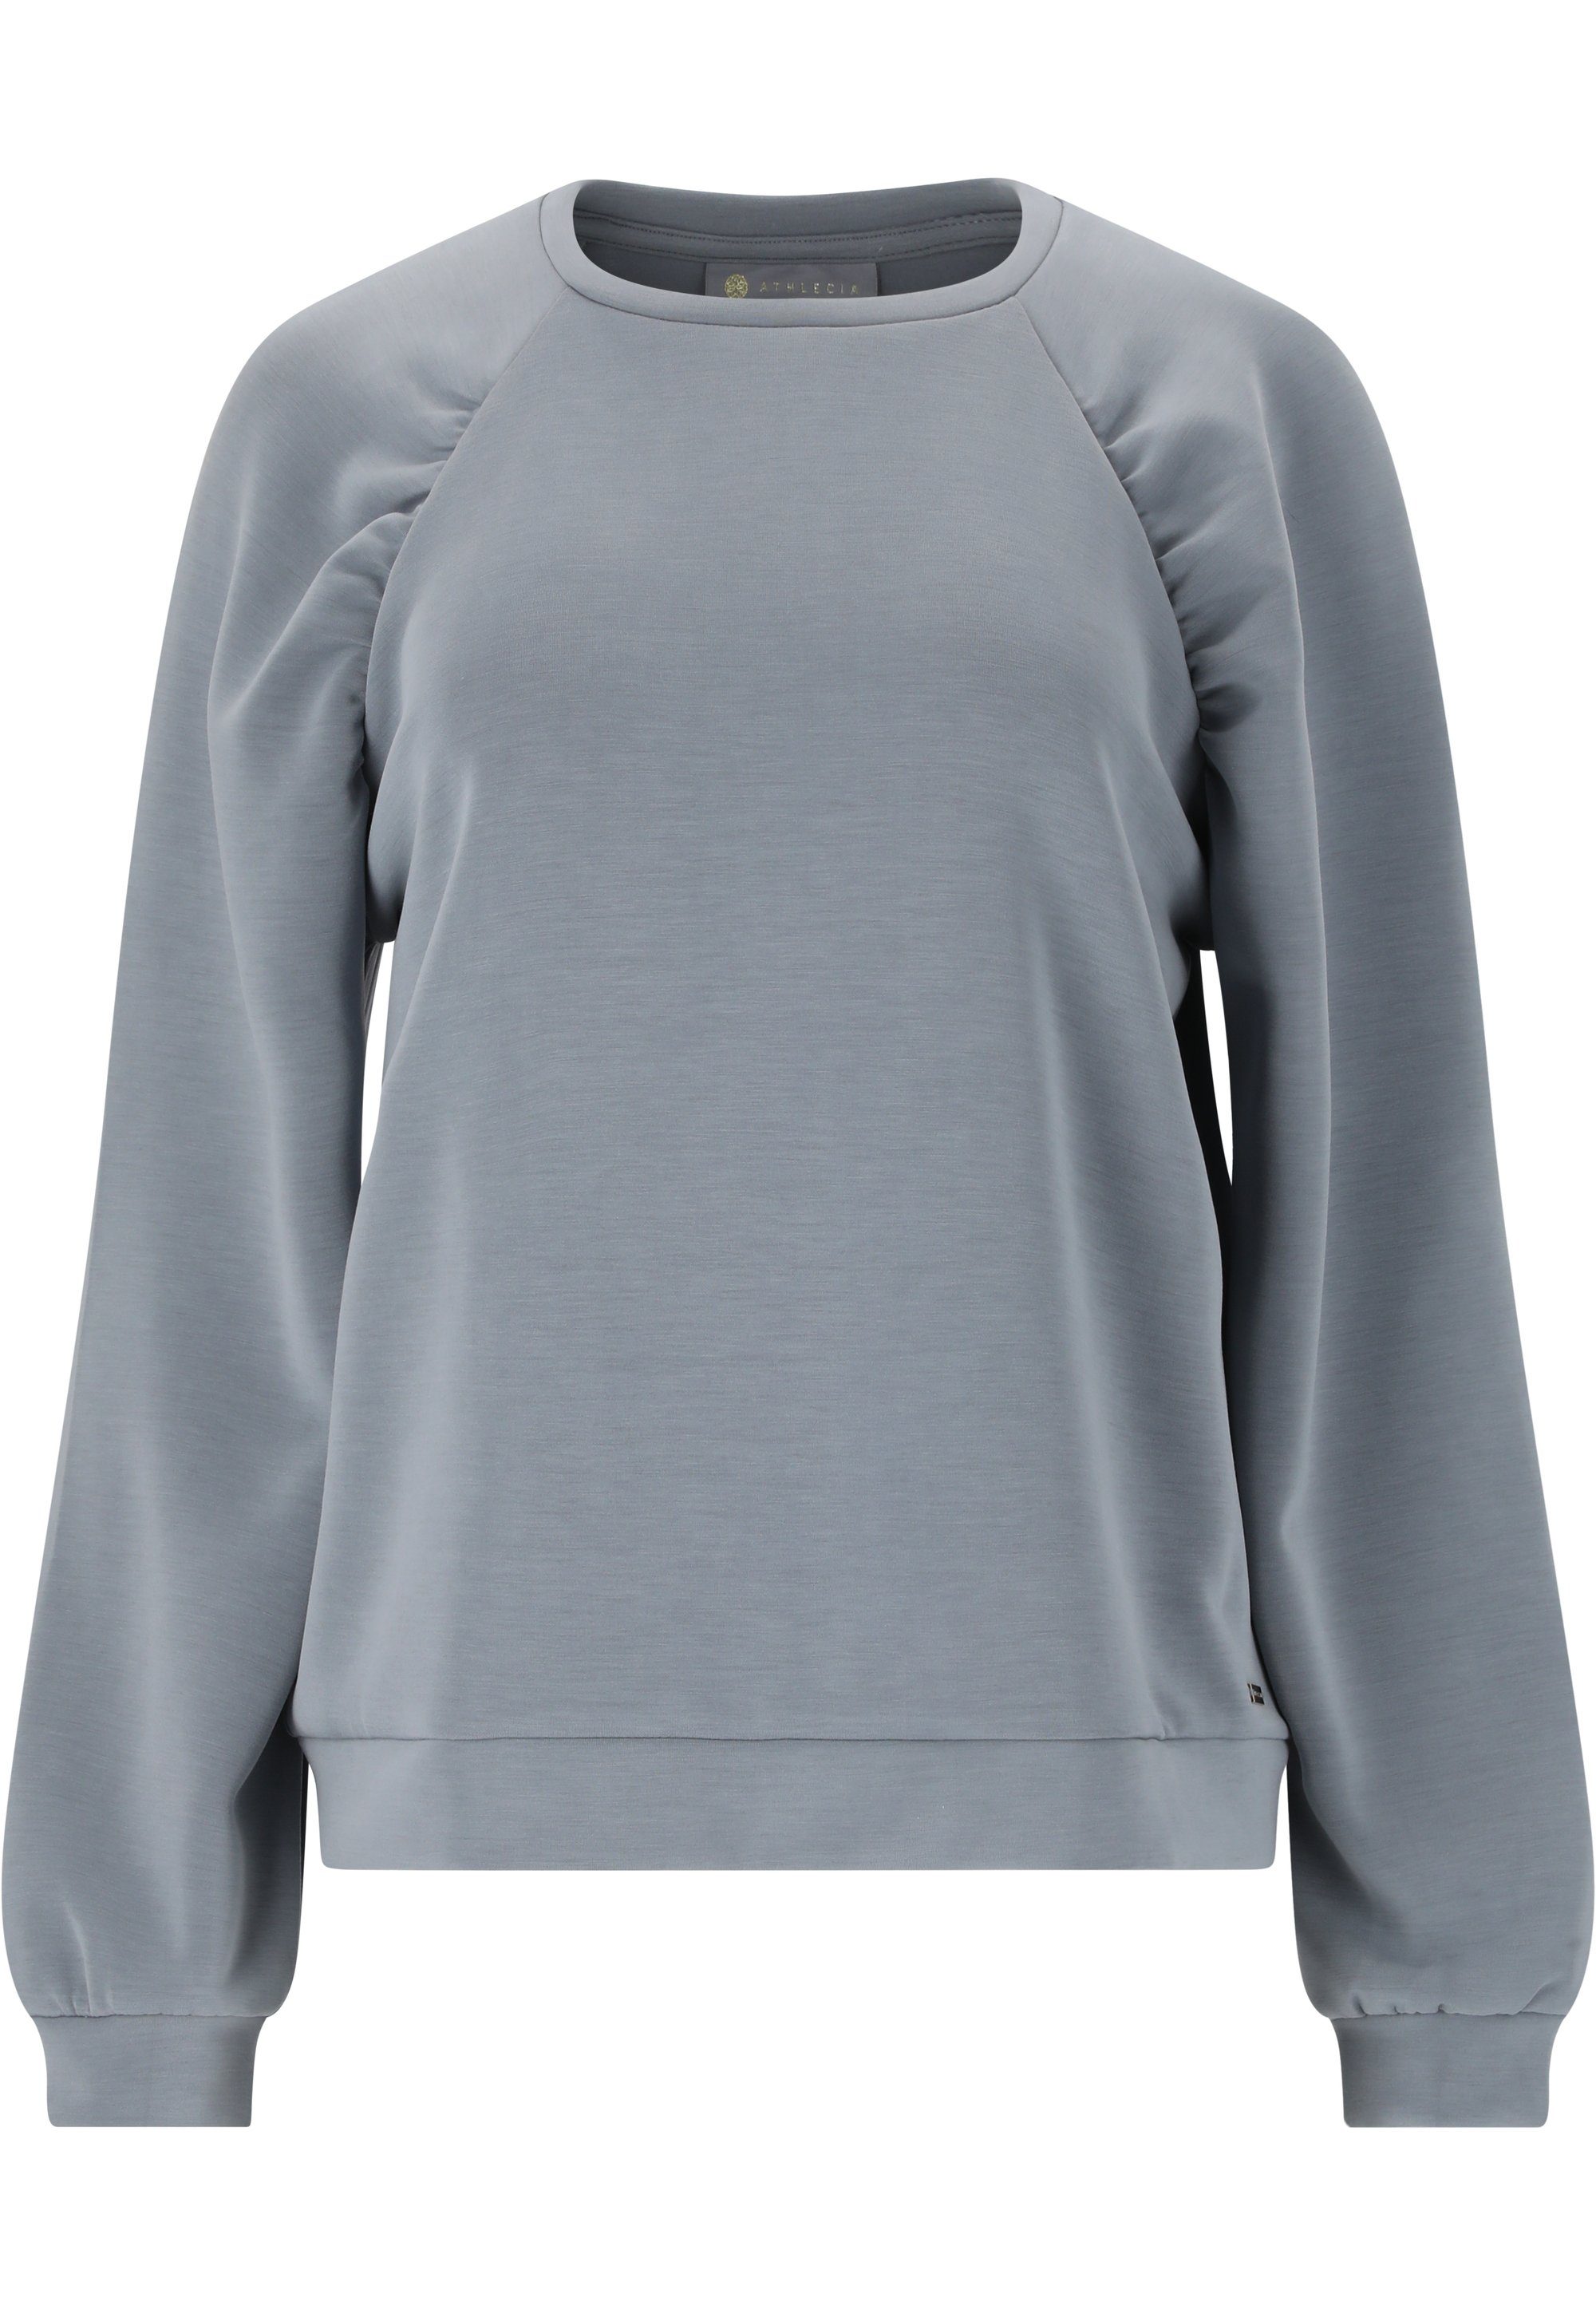 ATHLECIA Sweatshirt Jillnana in schlichtem hellblau Design